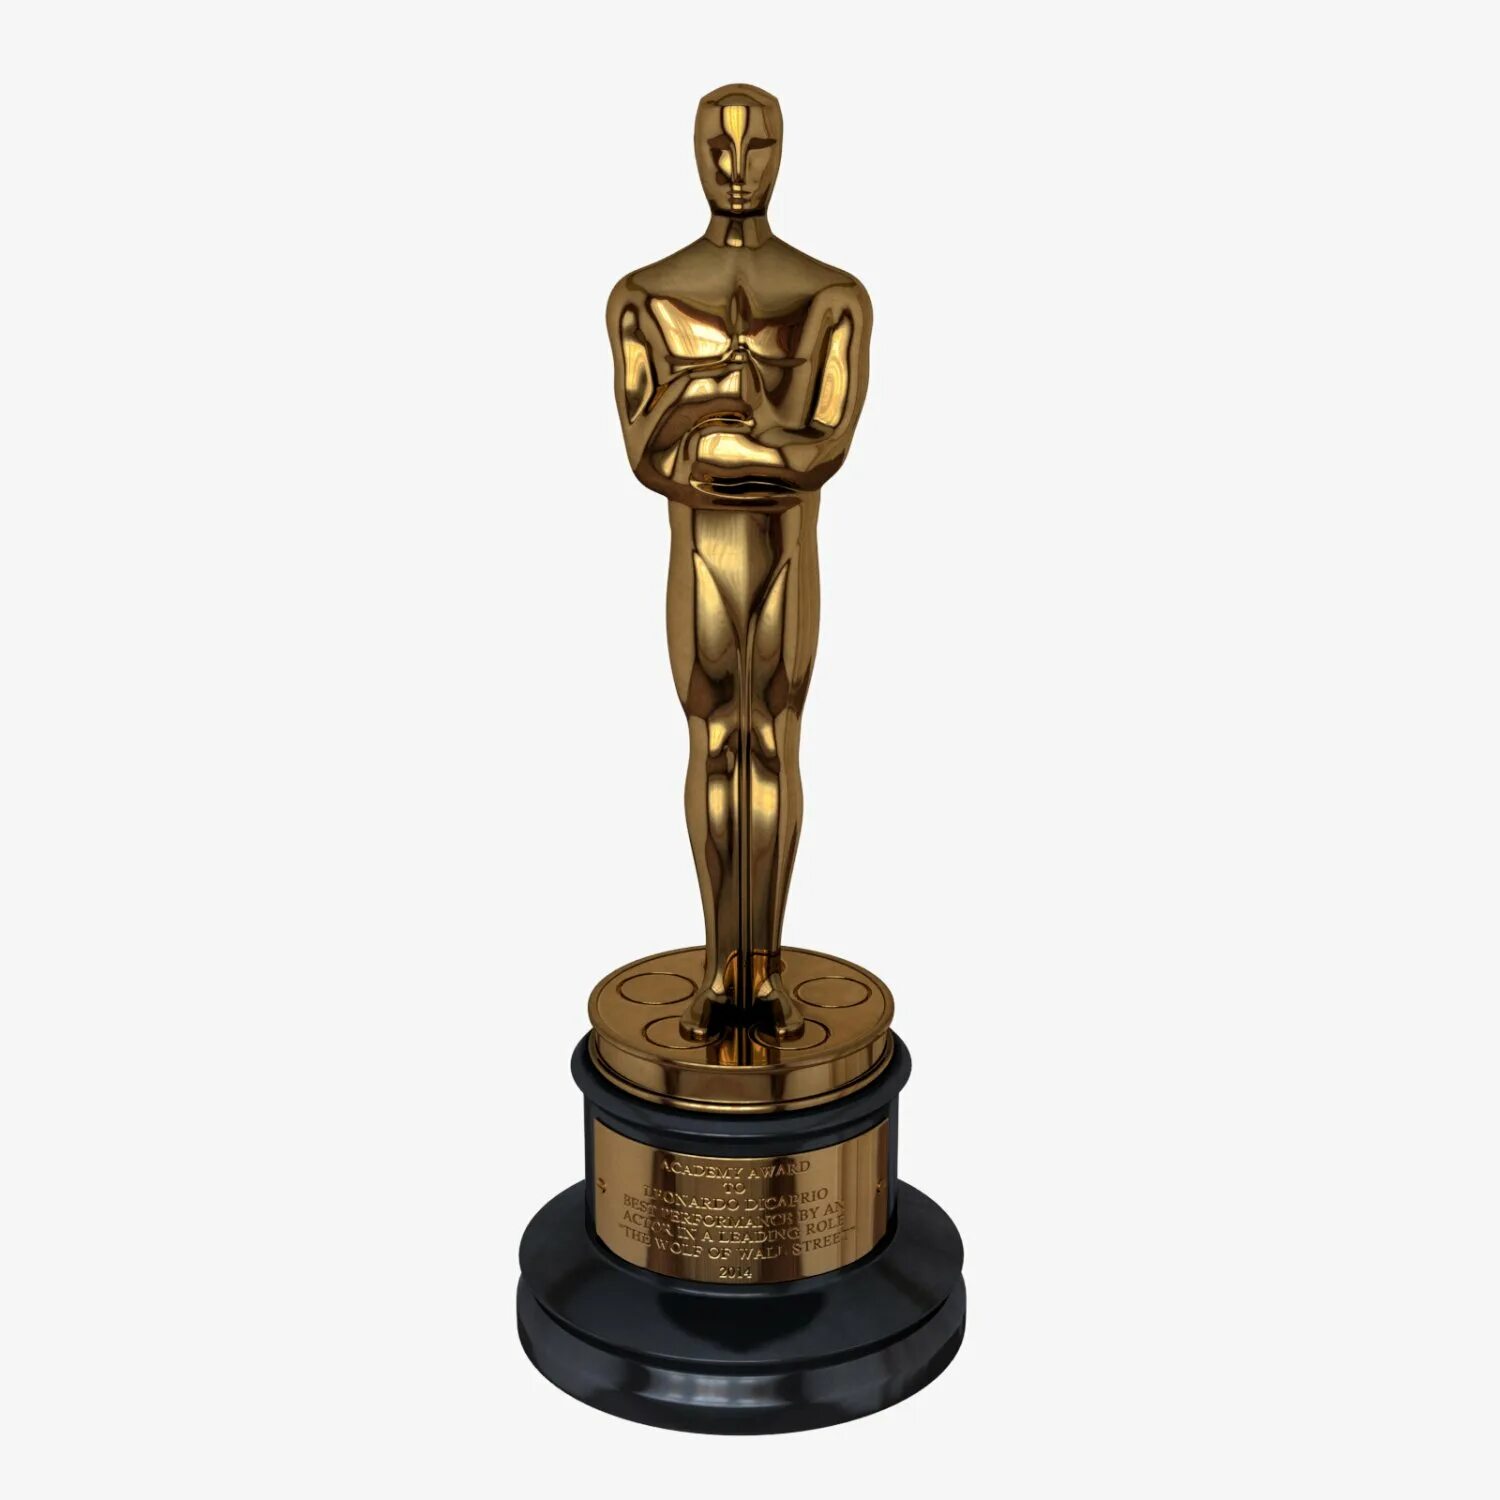 Статуэтка Оскар. 3d model Oscar statuette. Статуэтка Оскар 3д. Статуэтка Оскара 3д модель.